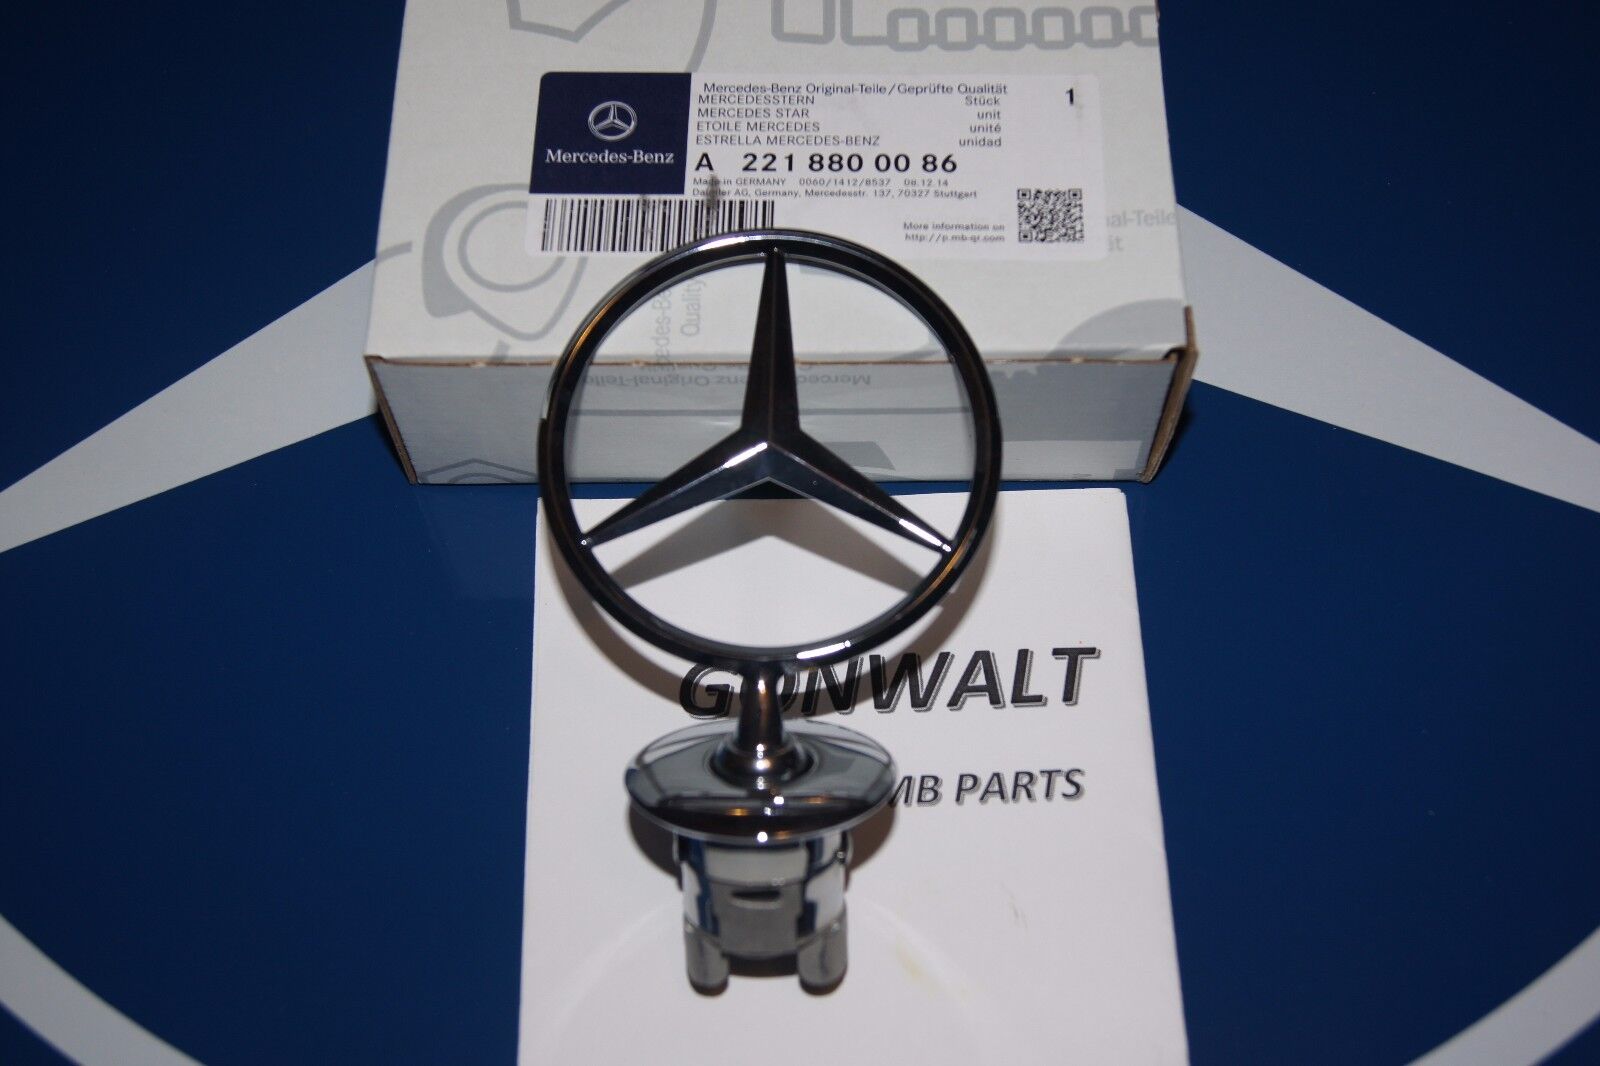 Mercedes Benz Hood Star Ornament W212 E Class E320 E350 E550 E63 2218800086